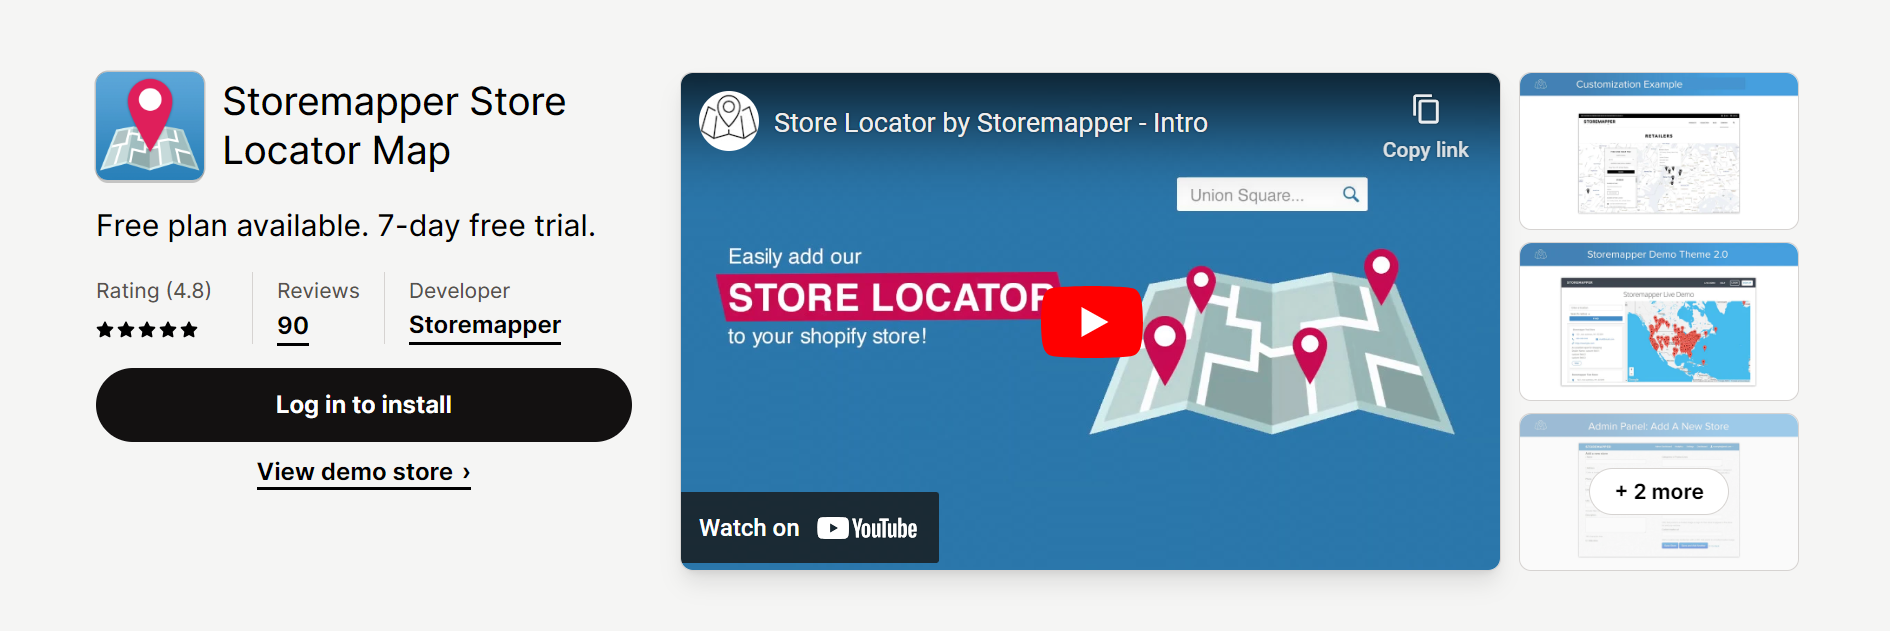 Storemapper Store Locator Map